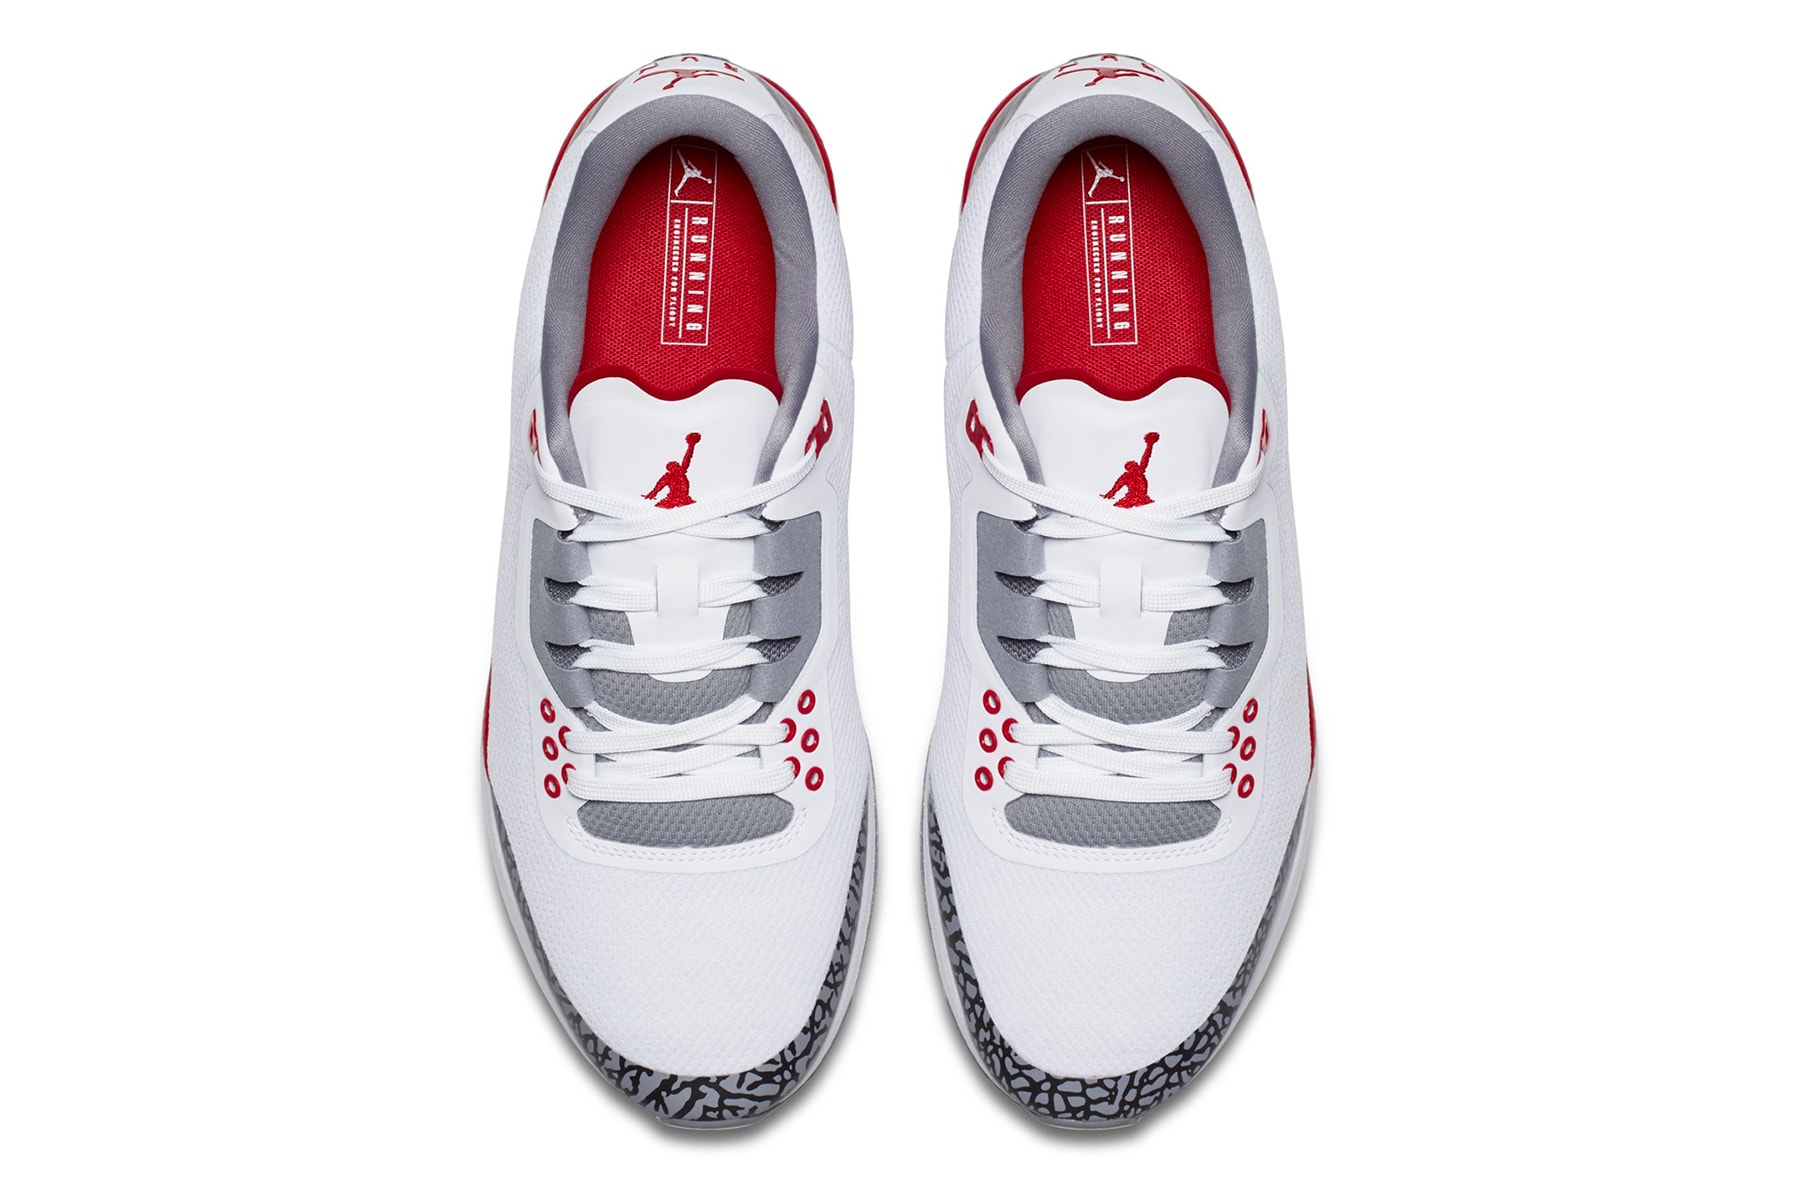 Jordan Zoom Tenacity 88 "Katrina" First Look "Fire Red" release date price Jordan Brand Nike sneaker running